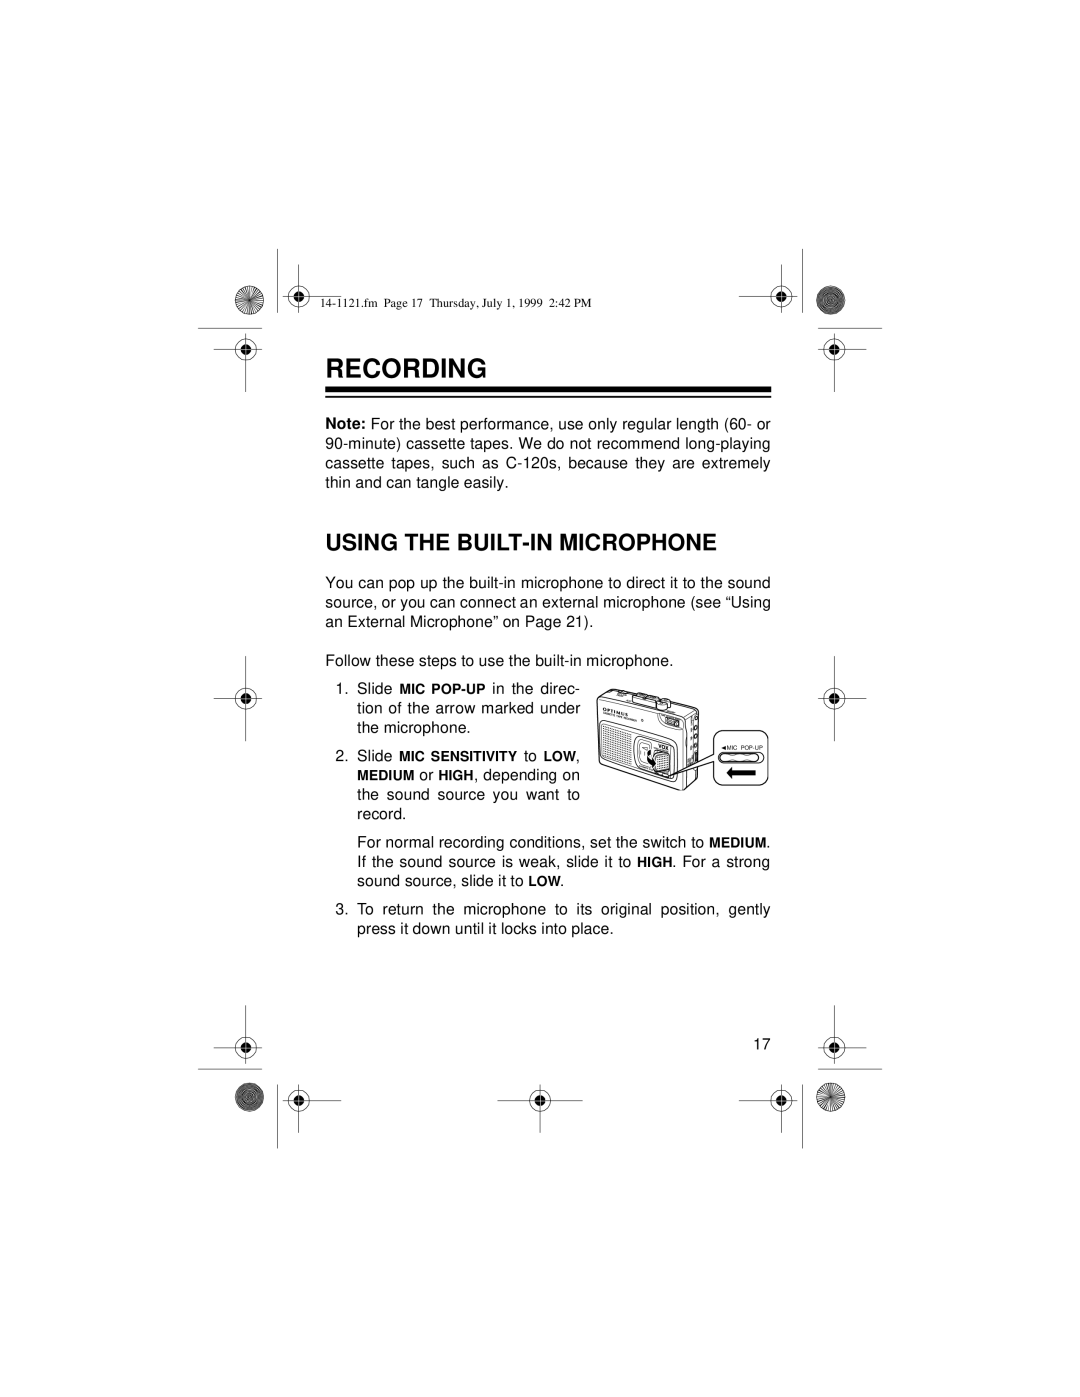 Optimus 2133-920-0-01, CTR-115, 14-1121 owner manual Recording, Using The Built-Inmicrophone 